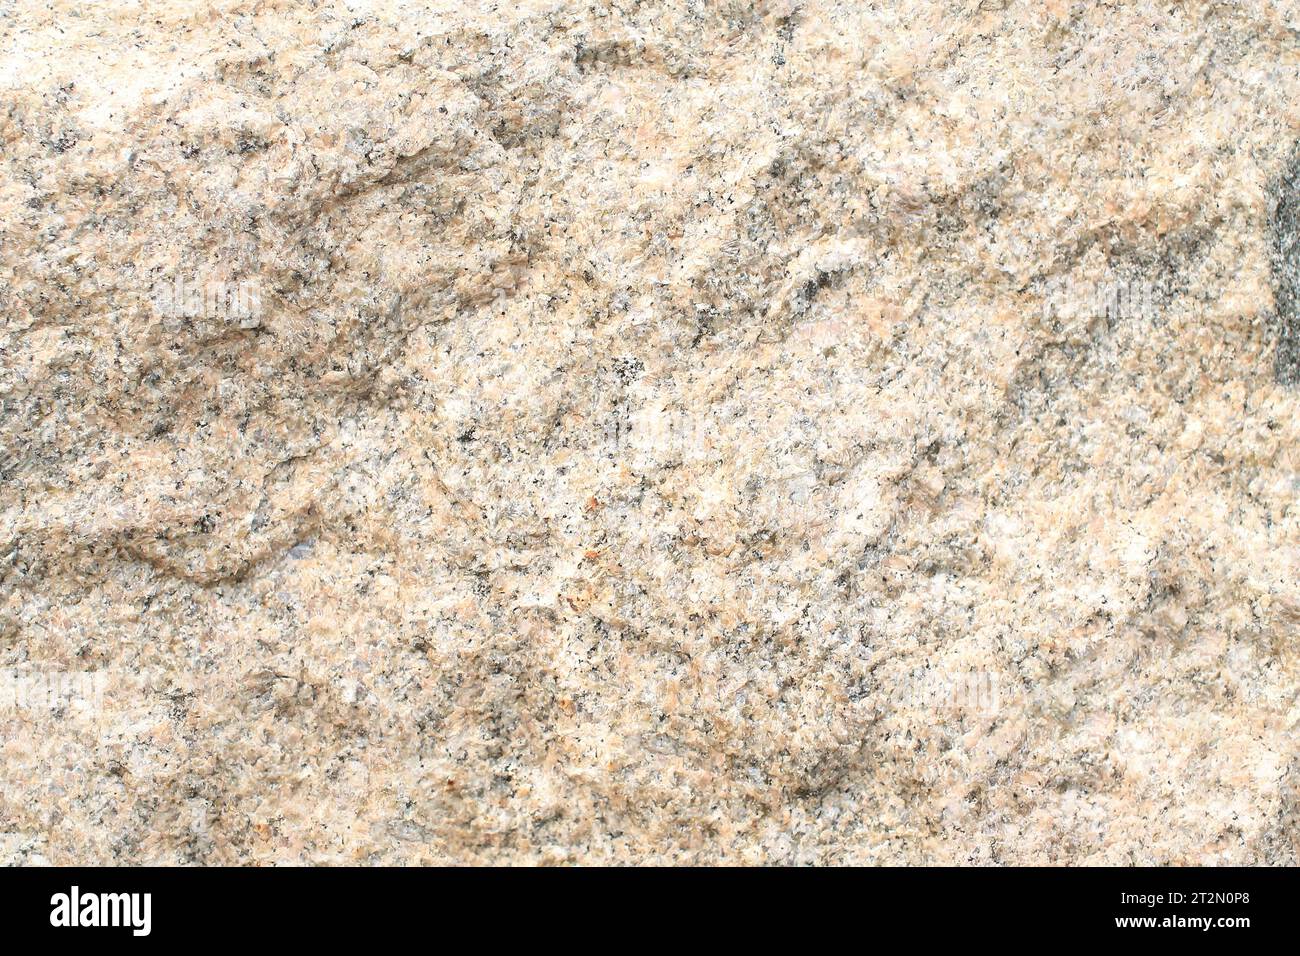 Abstract natural rock stone granite grunge rusty metal texture design background. natural color stone material granite design wallpaper. Stock Photo